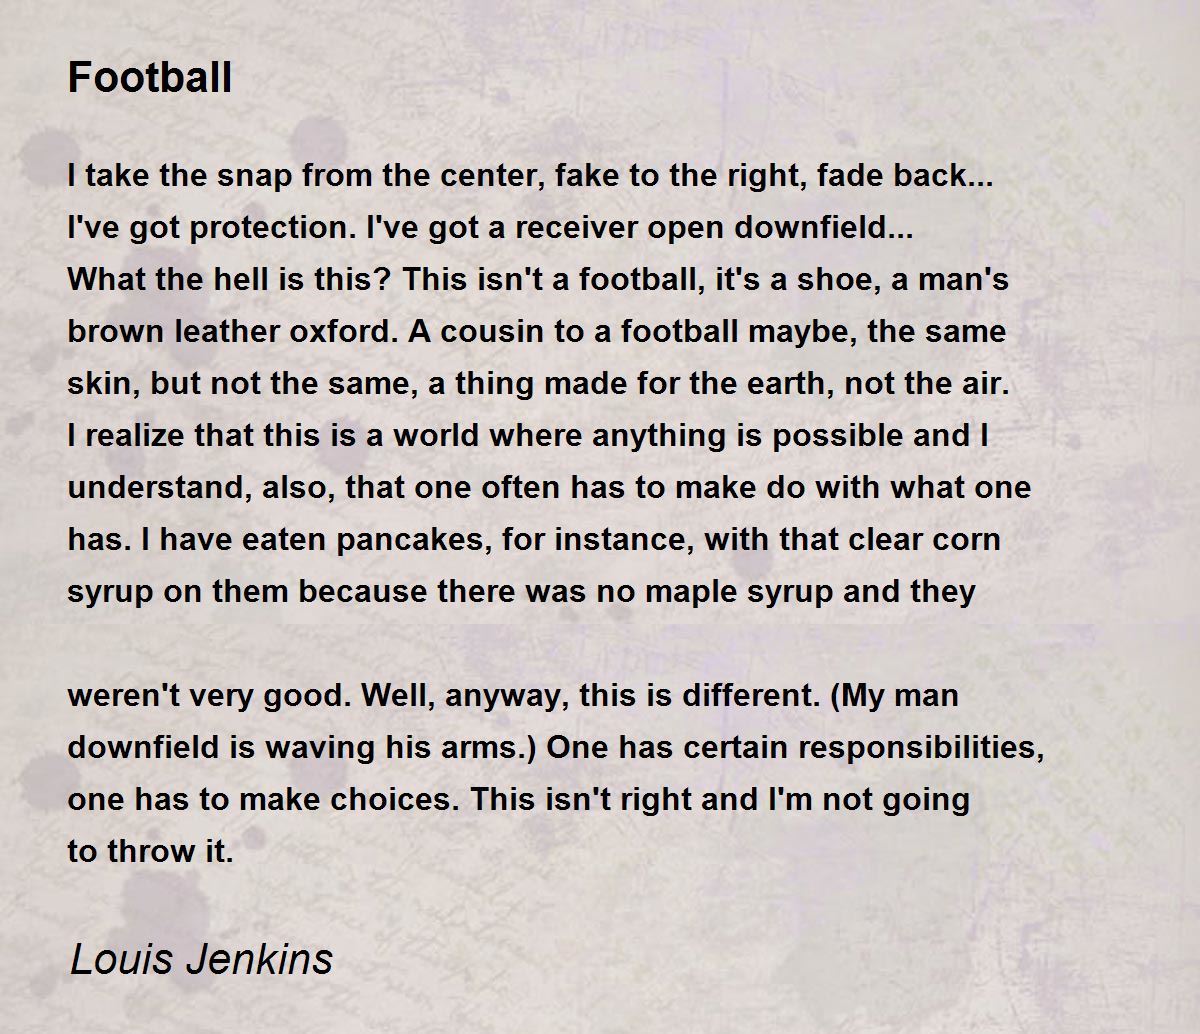 Football - Football Poem by Louis Jenkins